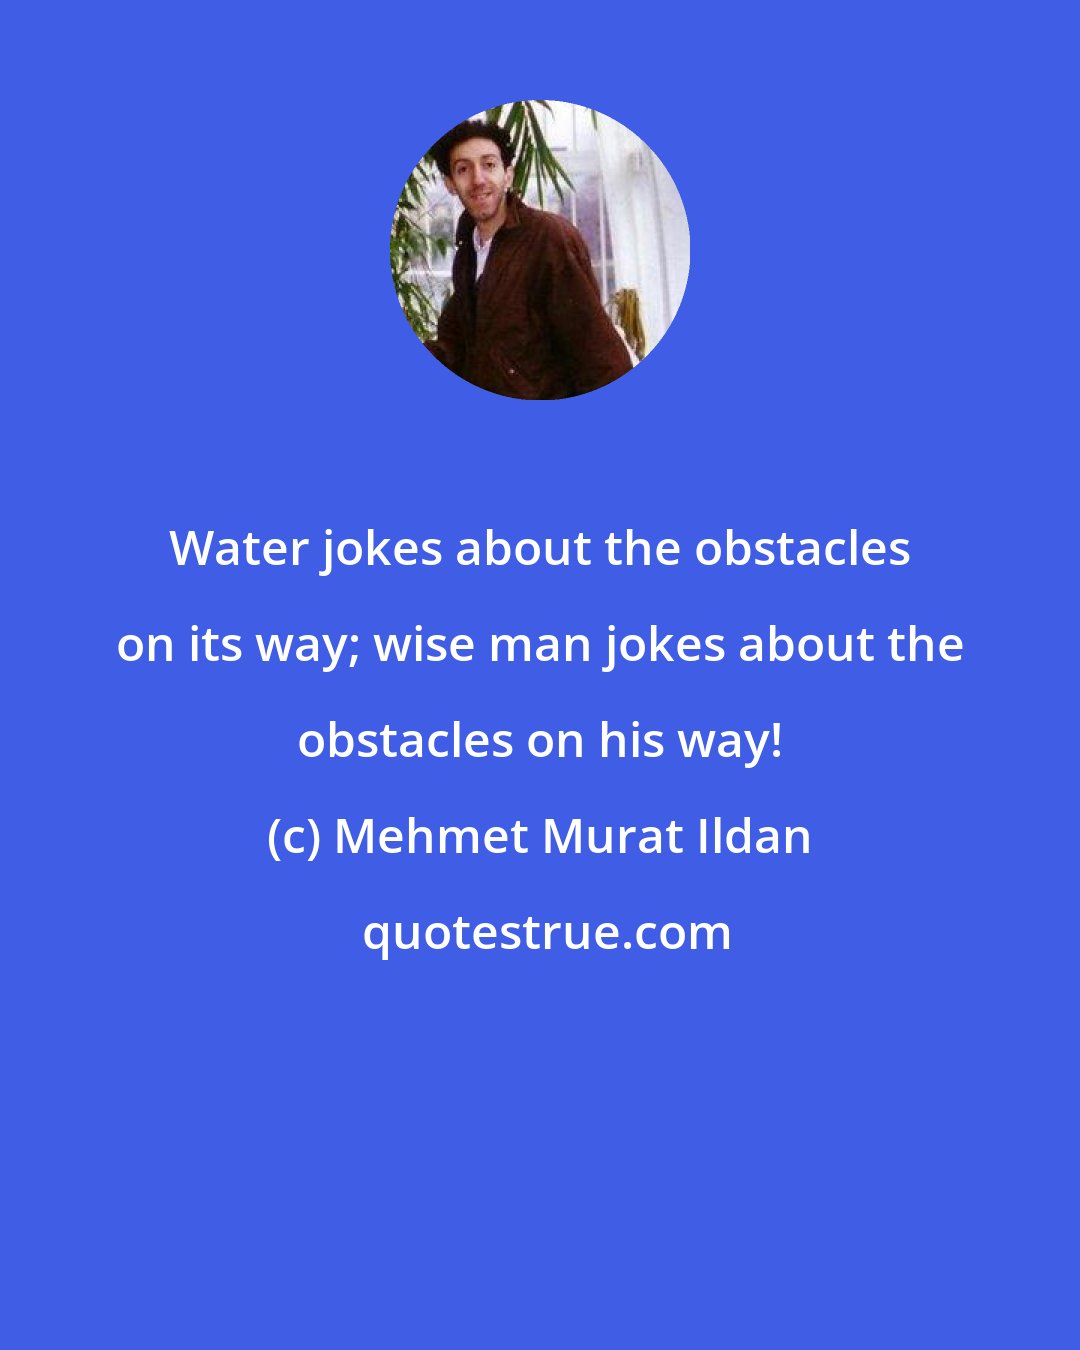 Mehmet Murat Ildan: Water jokes about the obstacles on its way; wise man jokes about the obstacles on his way!